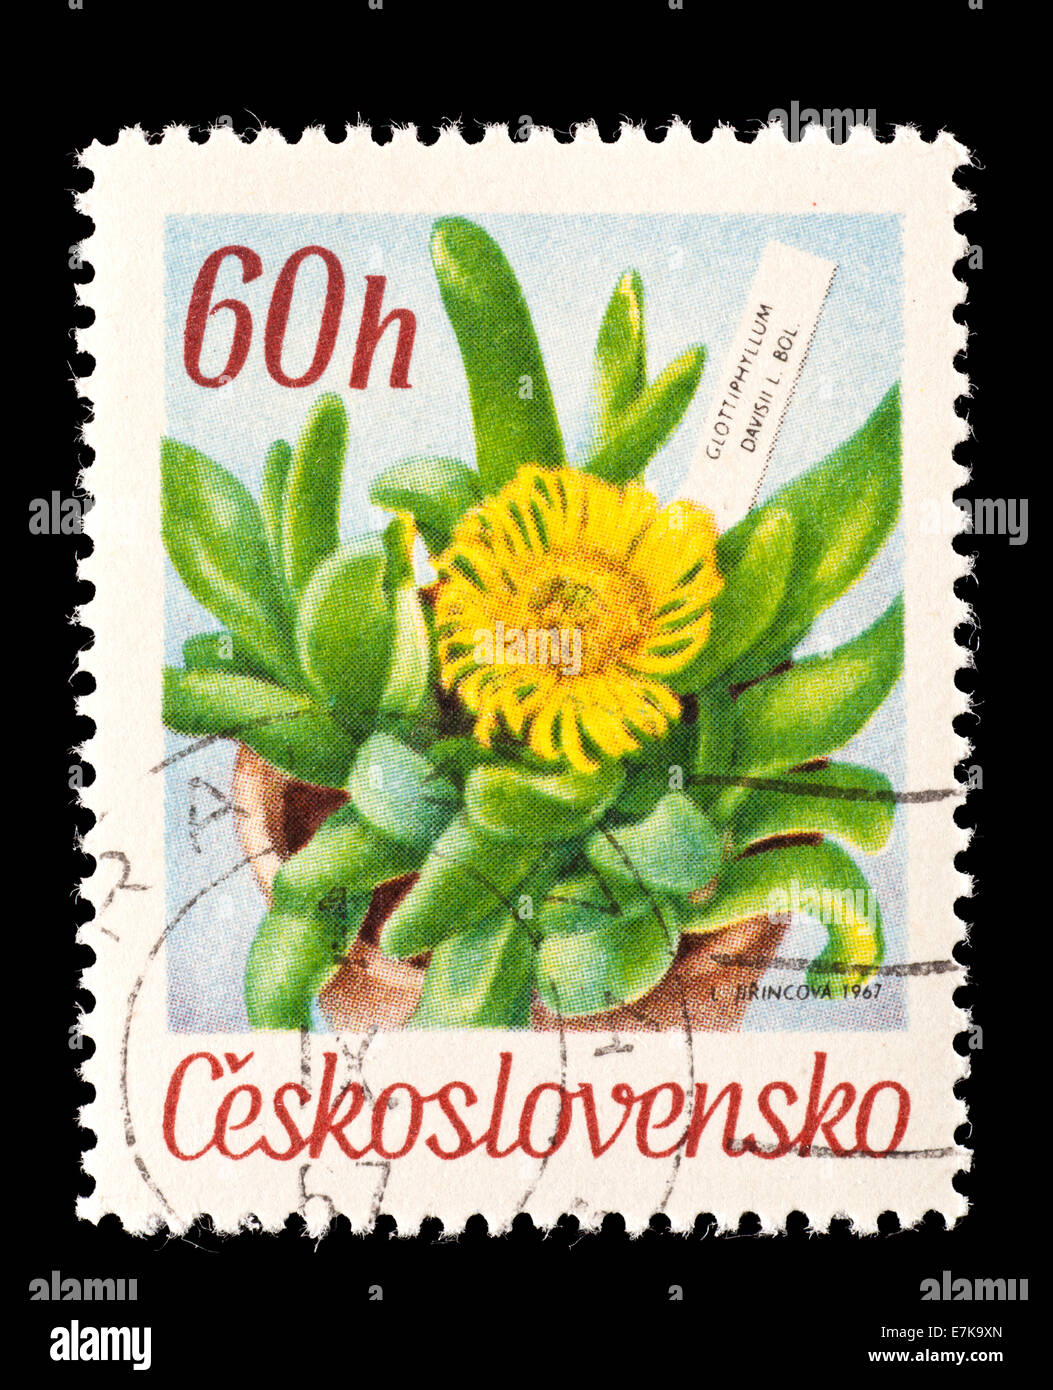 Postage stamp from Czechoslovakia depicting flowers (Glottiphyllum davisii) Stock Photo